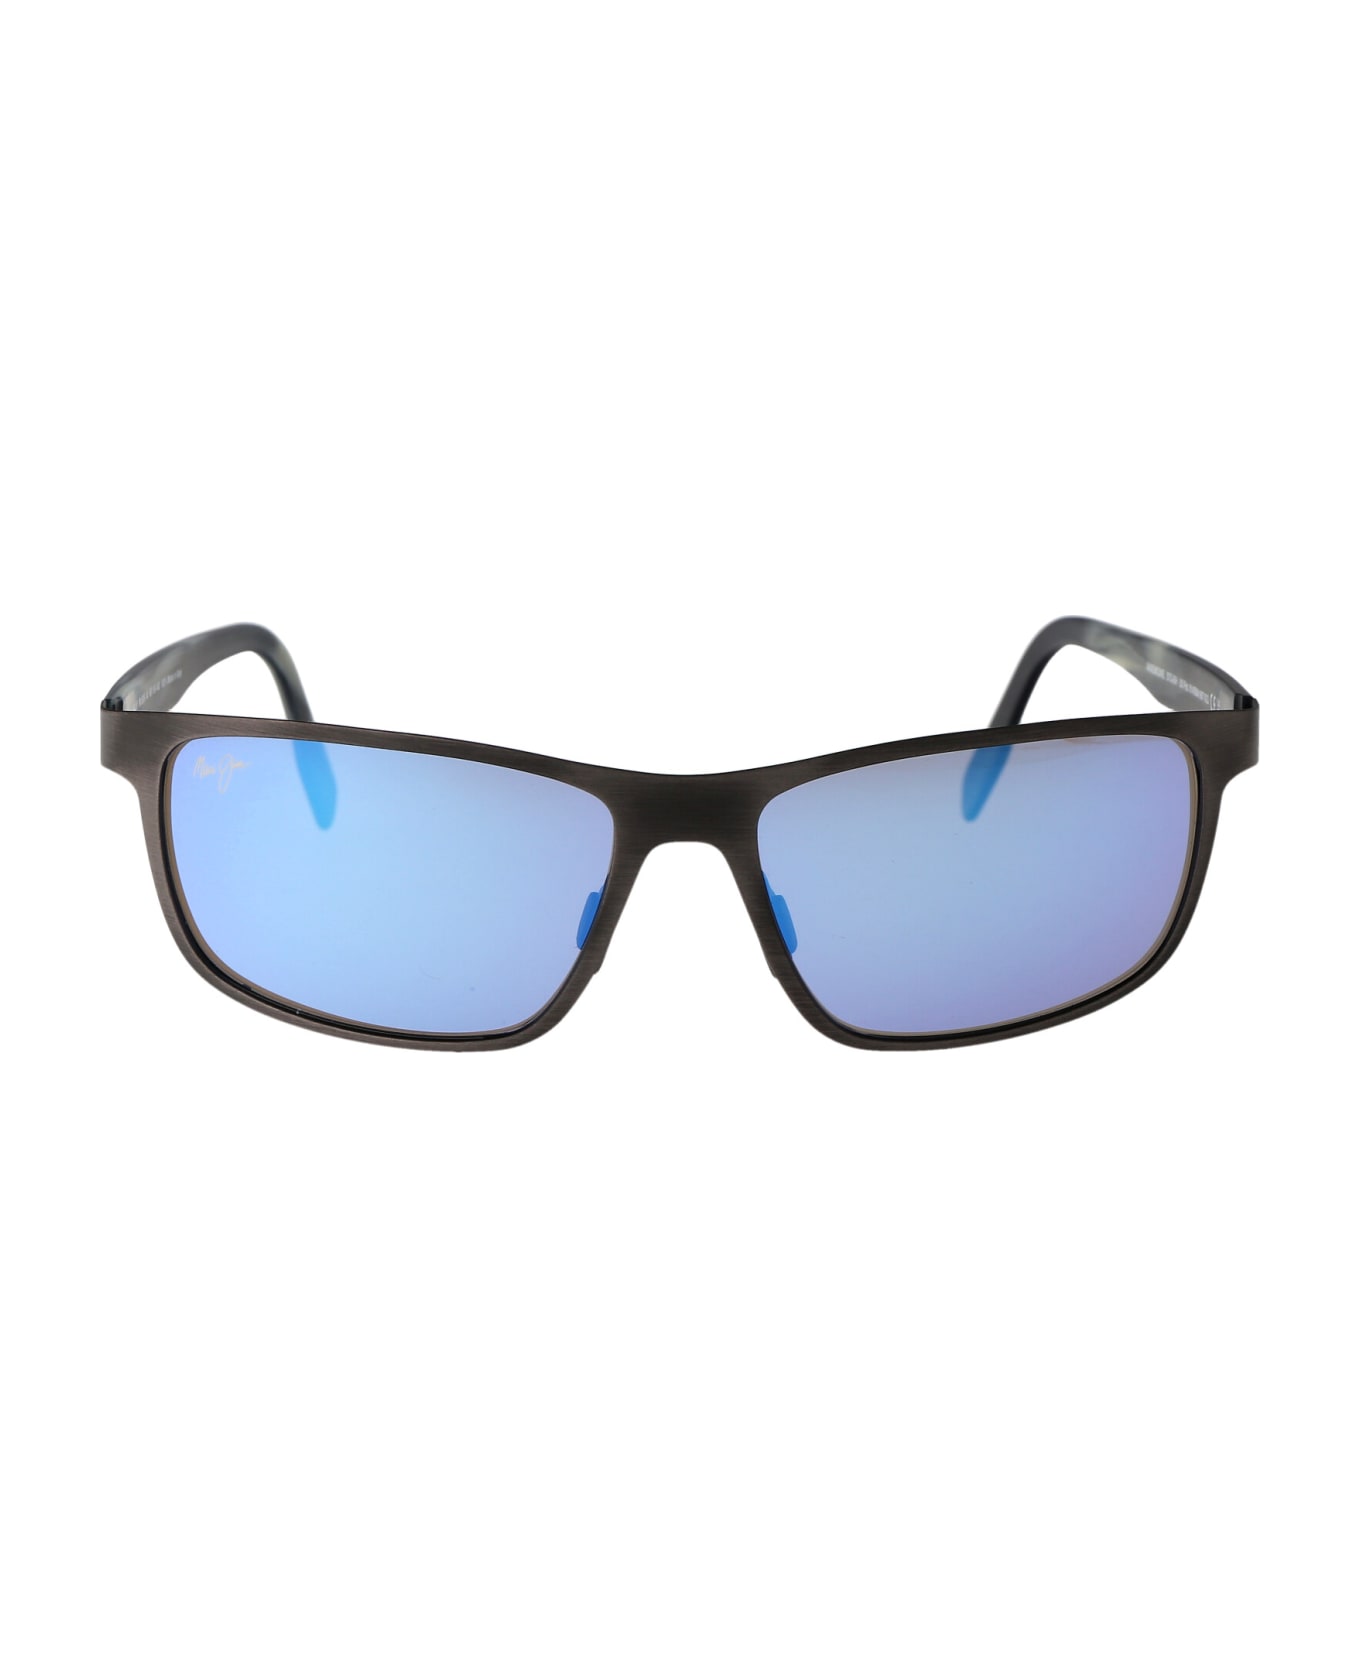 Maui Jim Anemone Sunglasses - 14 BLUE HAWAII ANEMONE BRUSHED DARK GUNMETAL サングラス